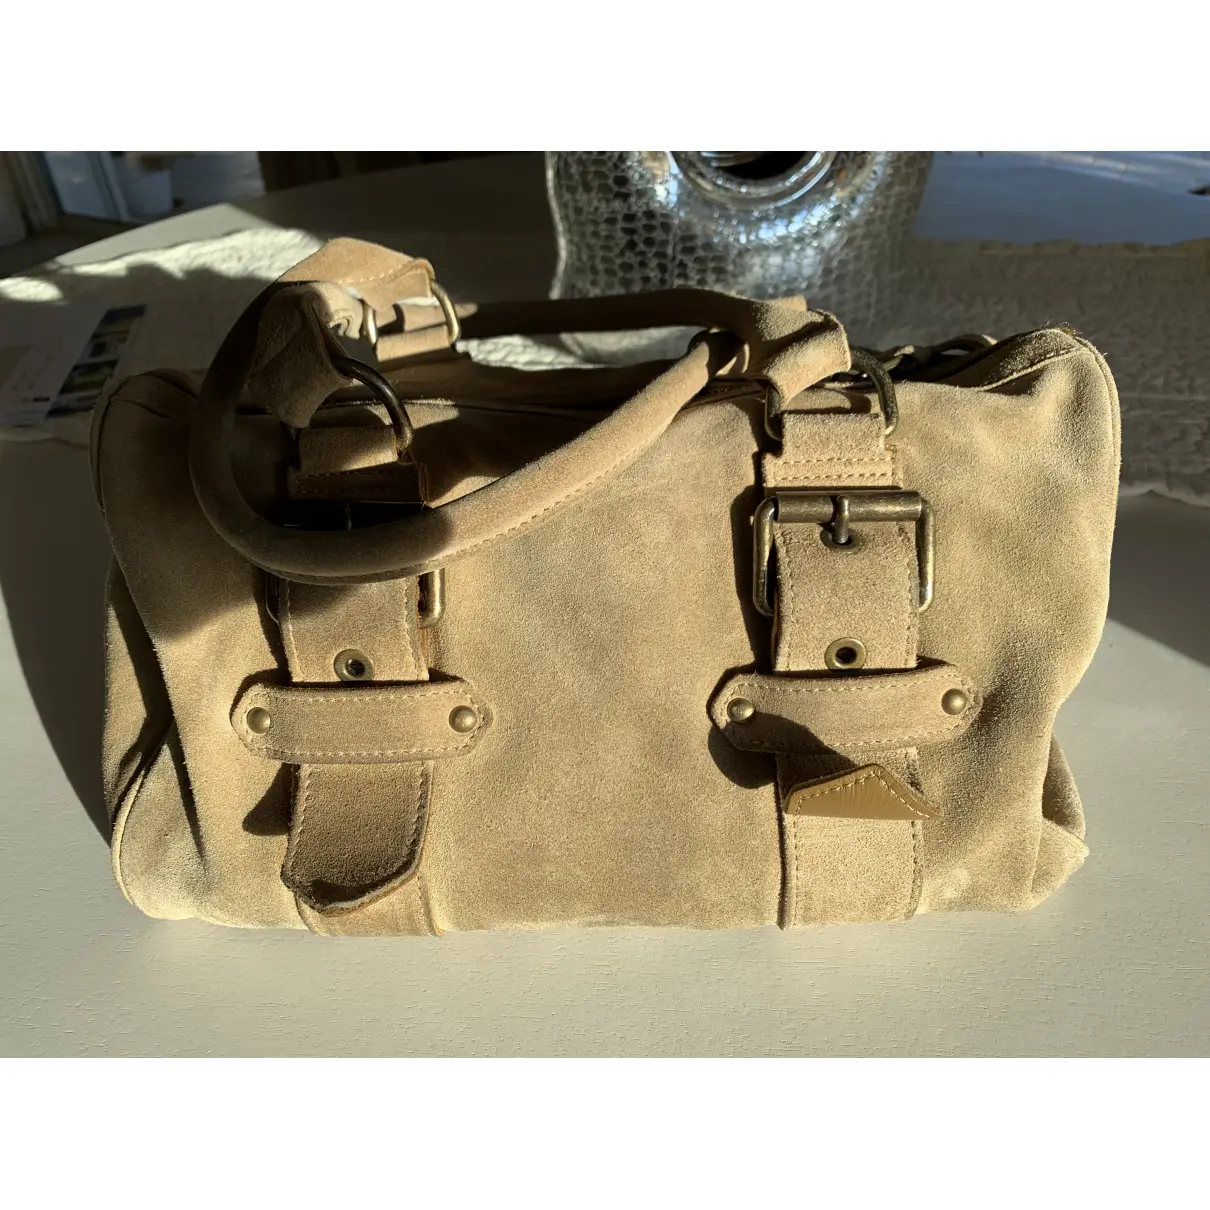 Buy Longchamp Kate Moss pony-style calfskin handbag online